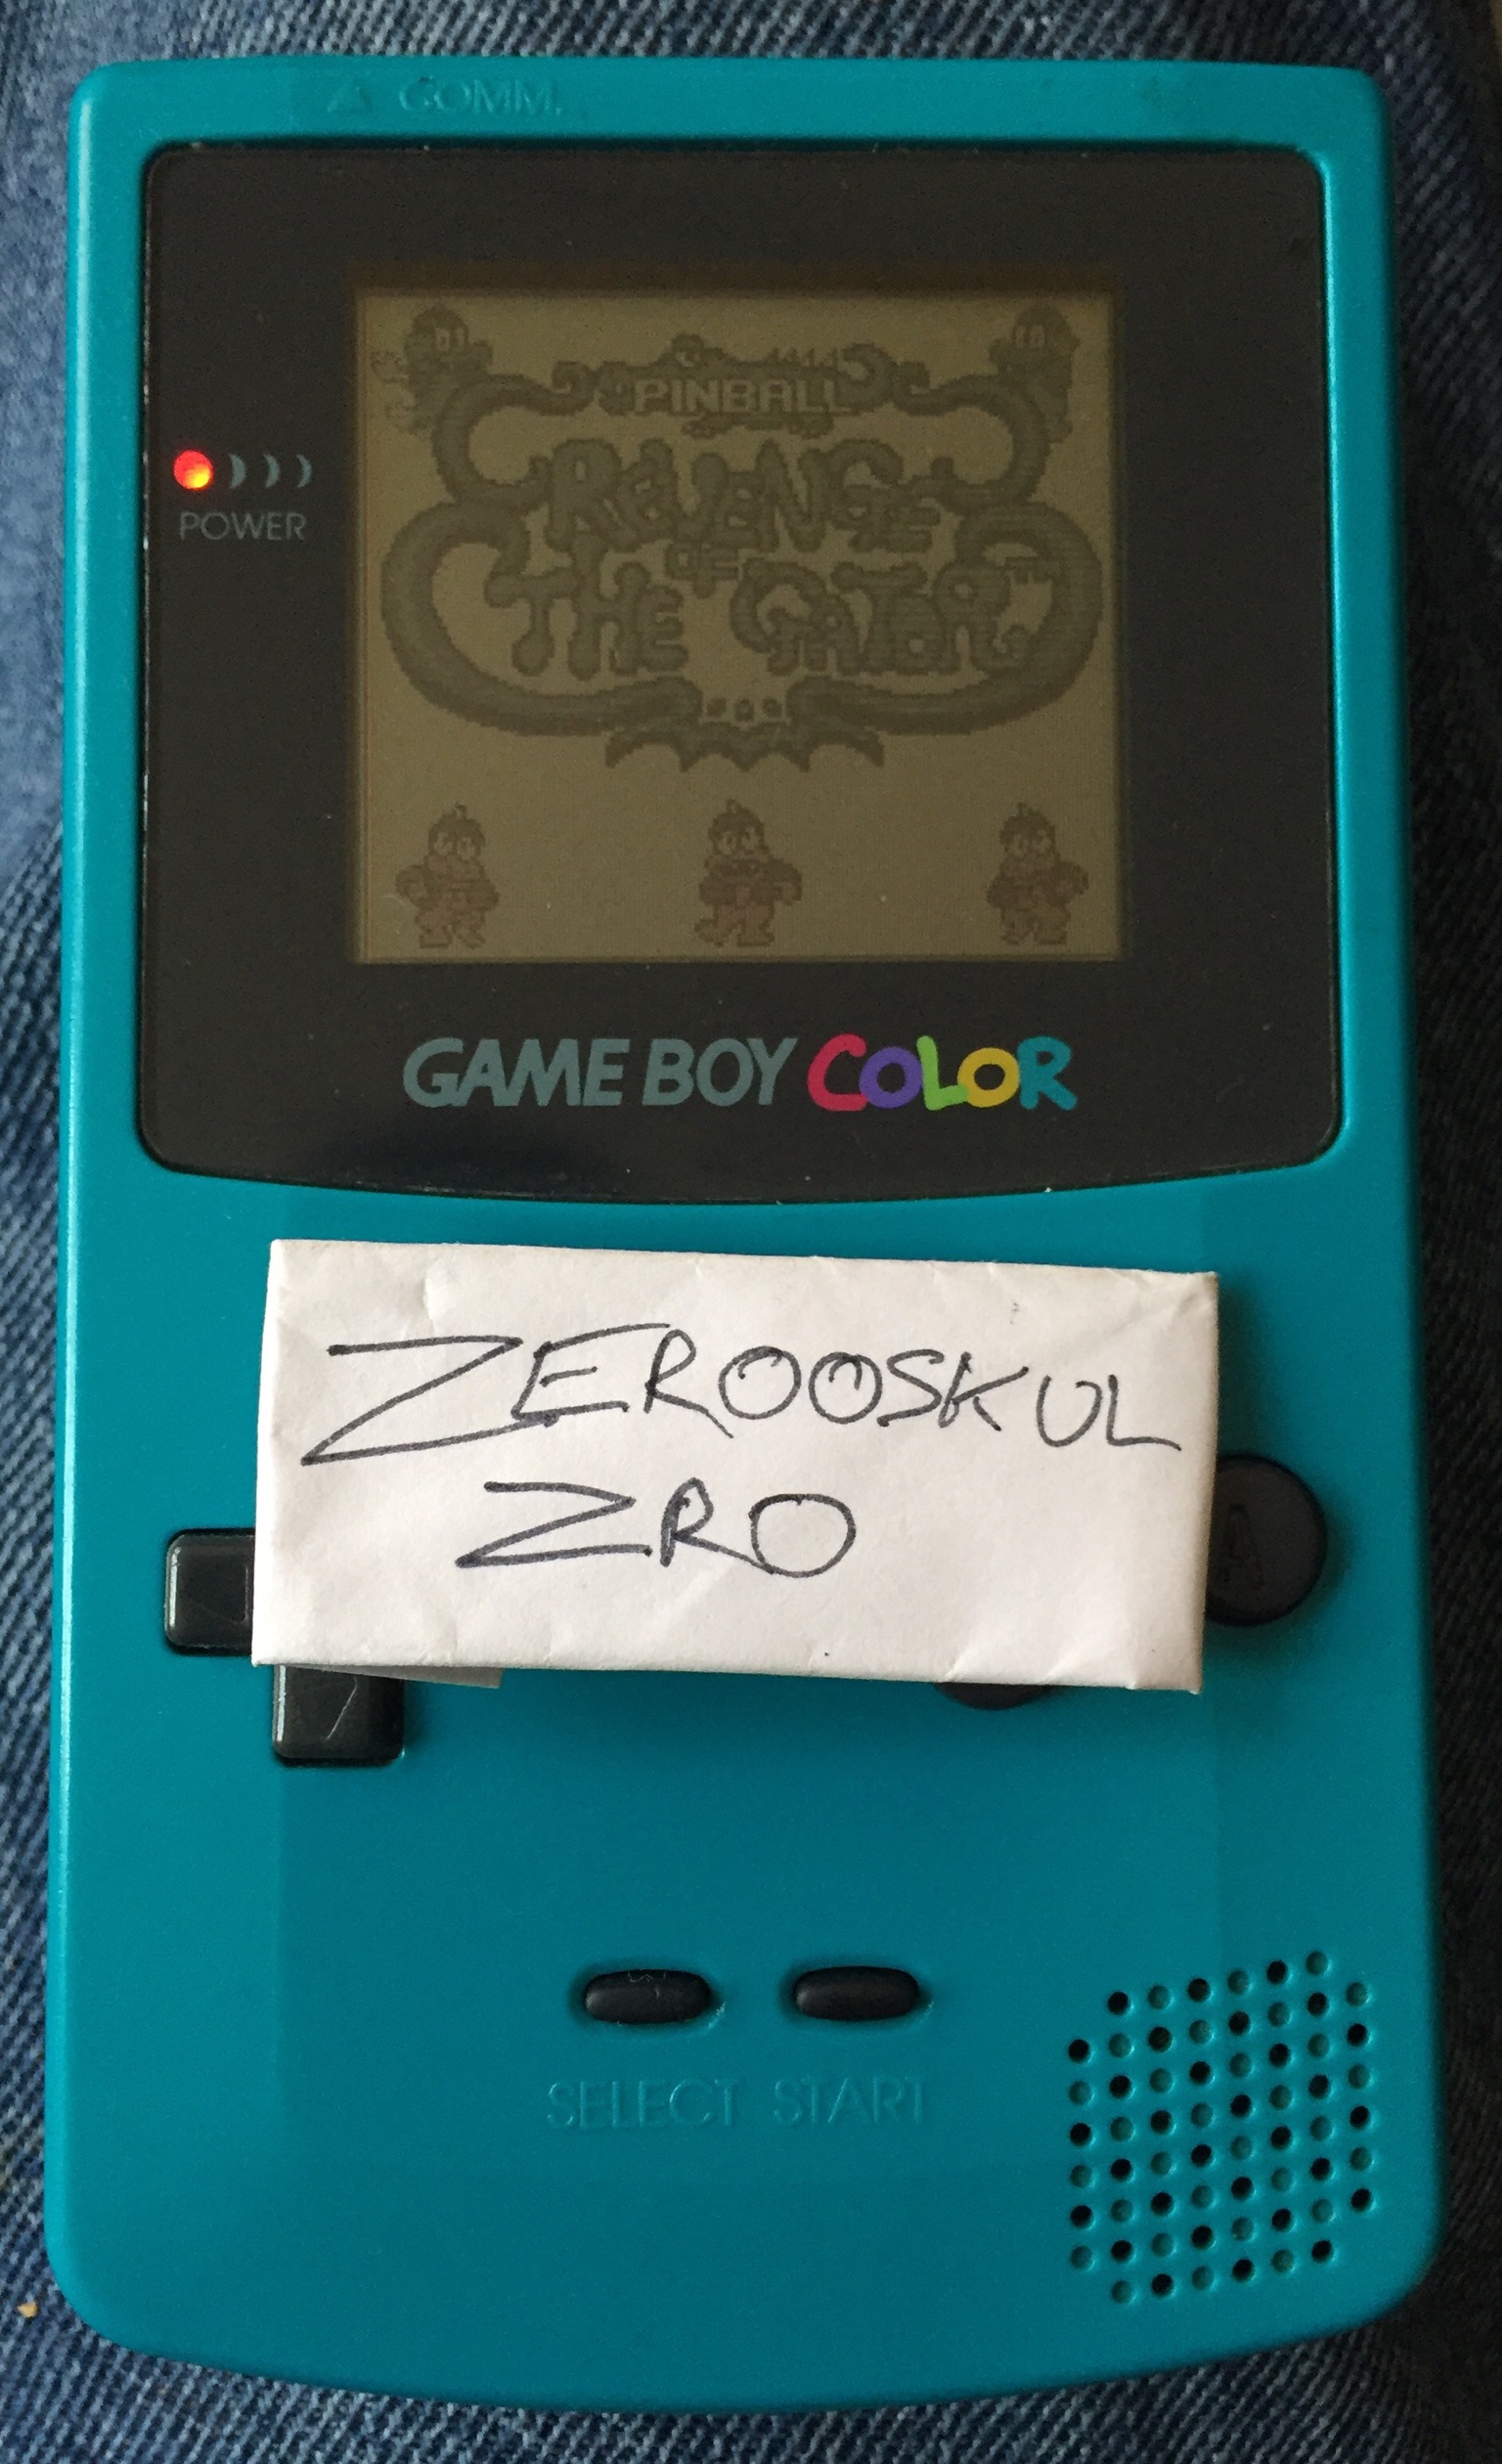 zerooskul: Pinball: Revenge of the Gator (Game Boy) 798,280 points on 2018-05-27 12:59:21